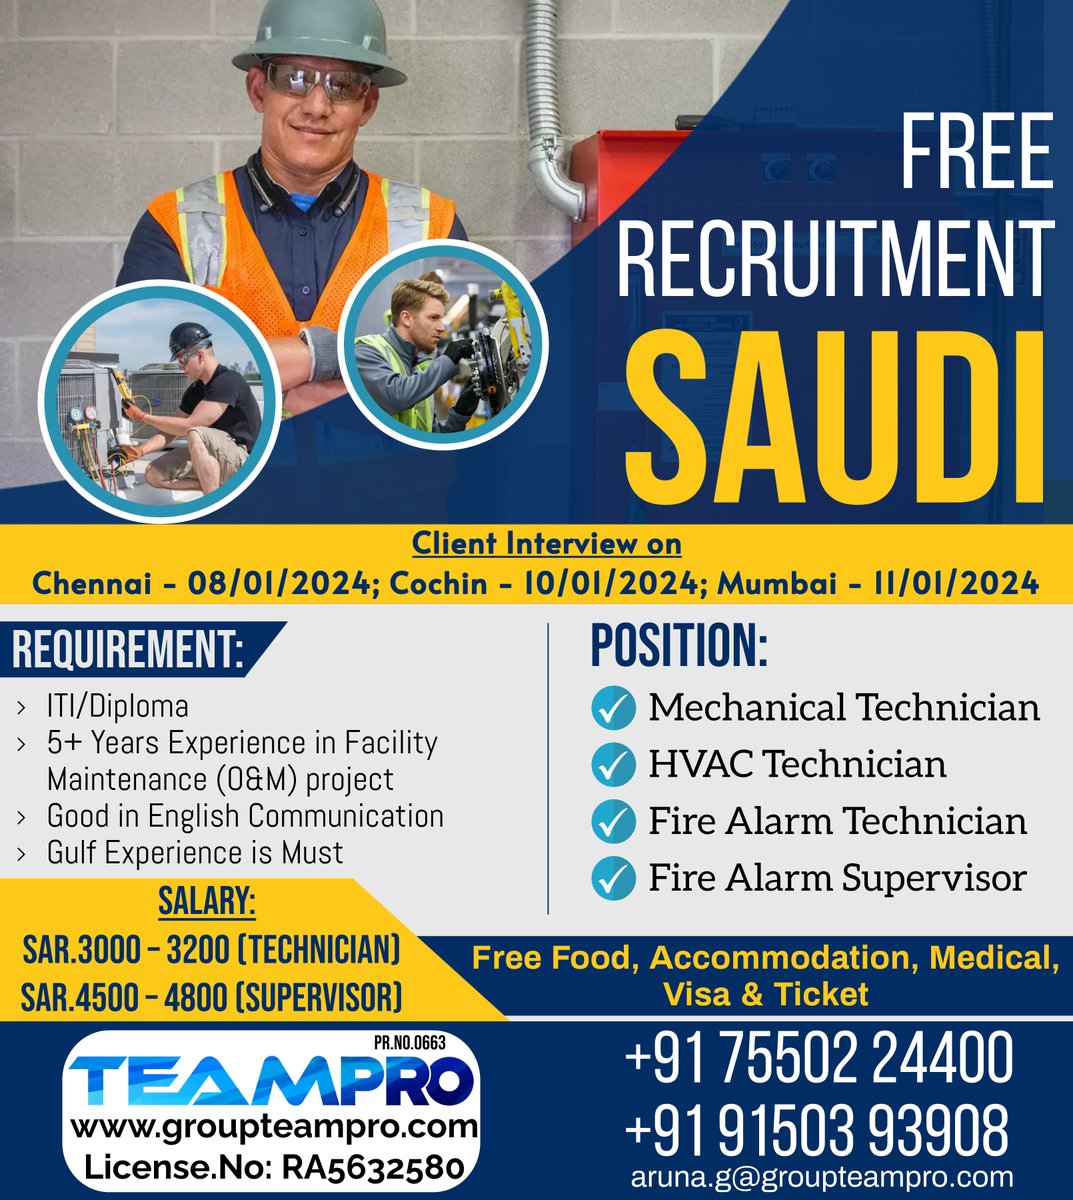 #Saudiarabia #Saudijobs #free #recruitment #Directinterview #Technician #HVAC #Mechanical #Firealarm #supervisor #gulf #gulfexperience #visa #saudijobvisa #cochin #Chennai #Mumbai #Direct #Immediate #Joiners #saudiprojects